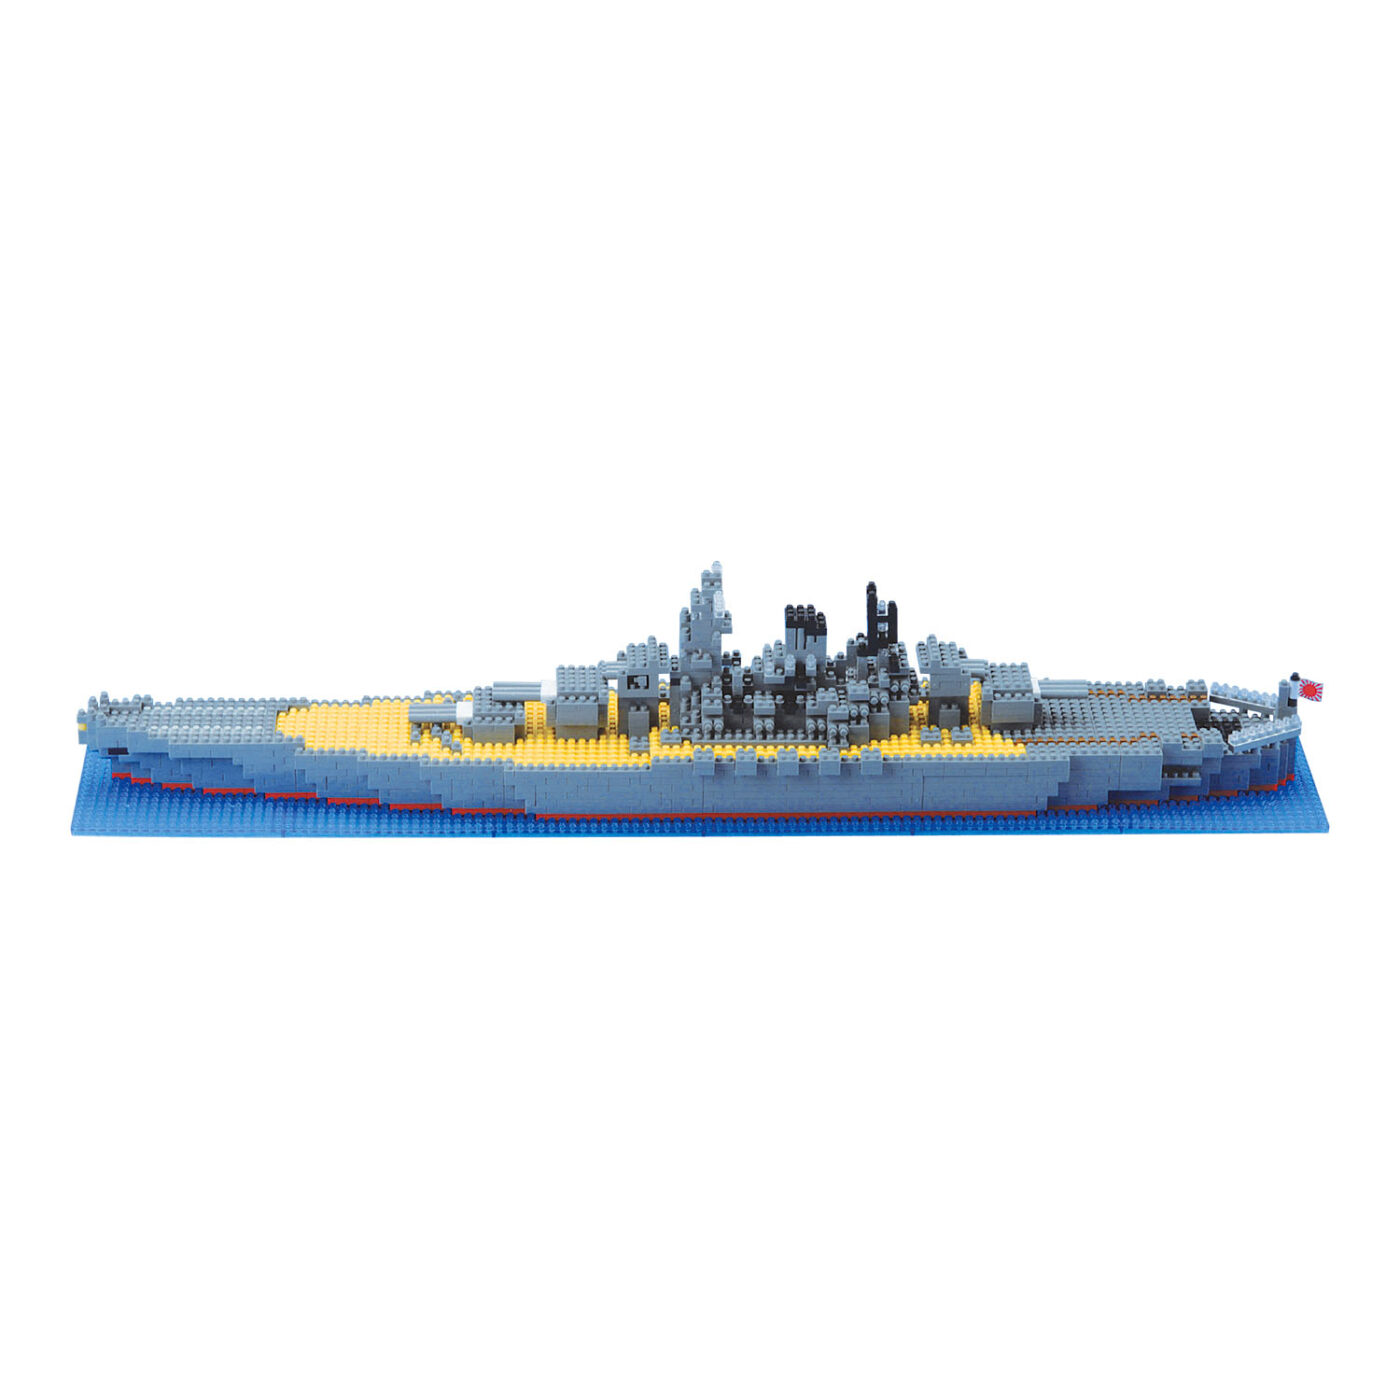 日本海軍 戦艦 大和の商品画像